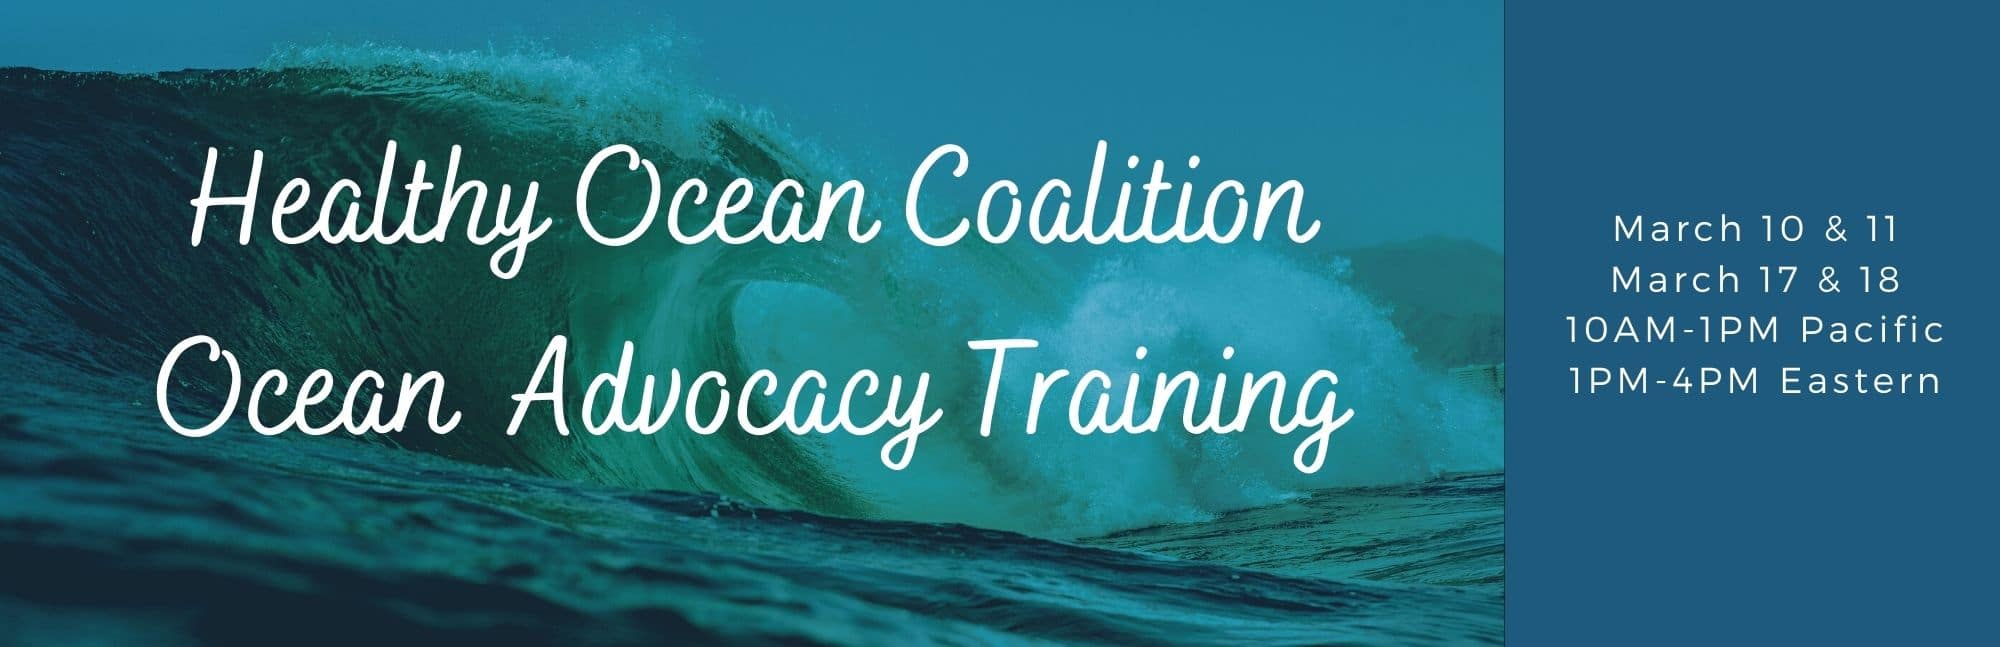 Healthy Ocean Advocacy Training - Chesapeake Network